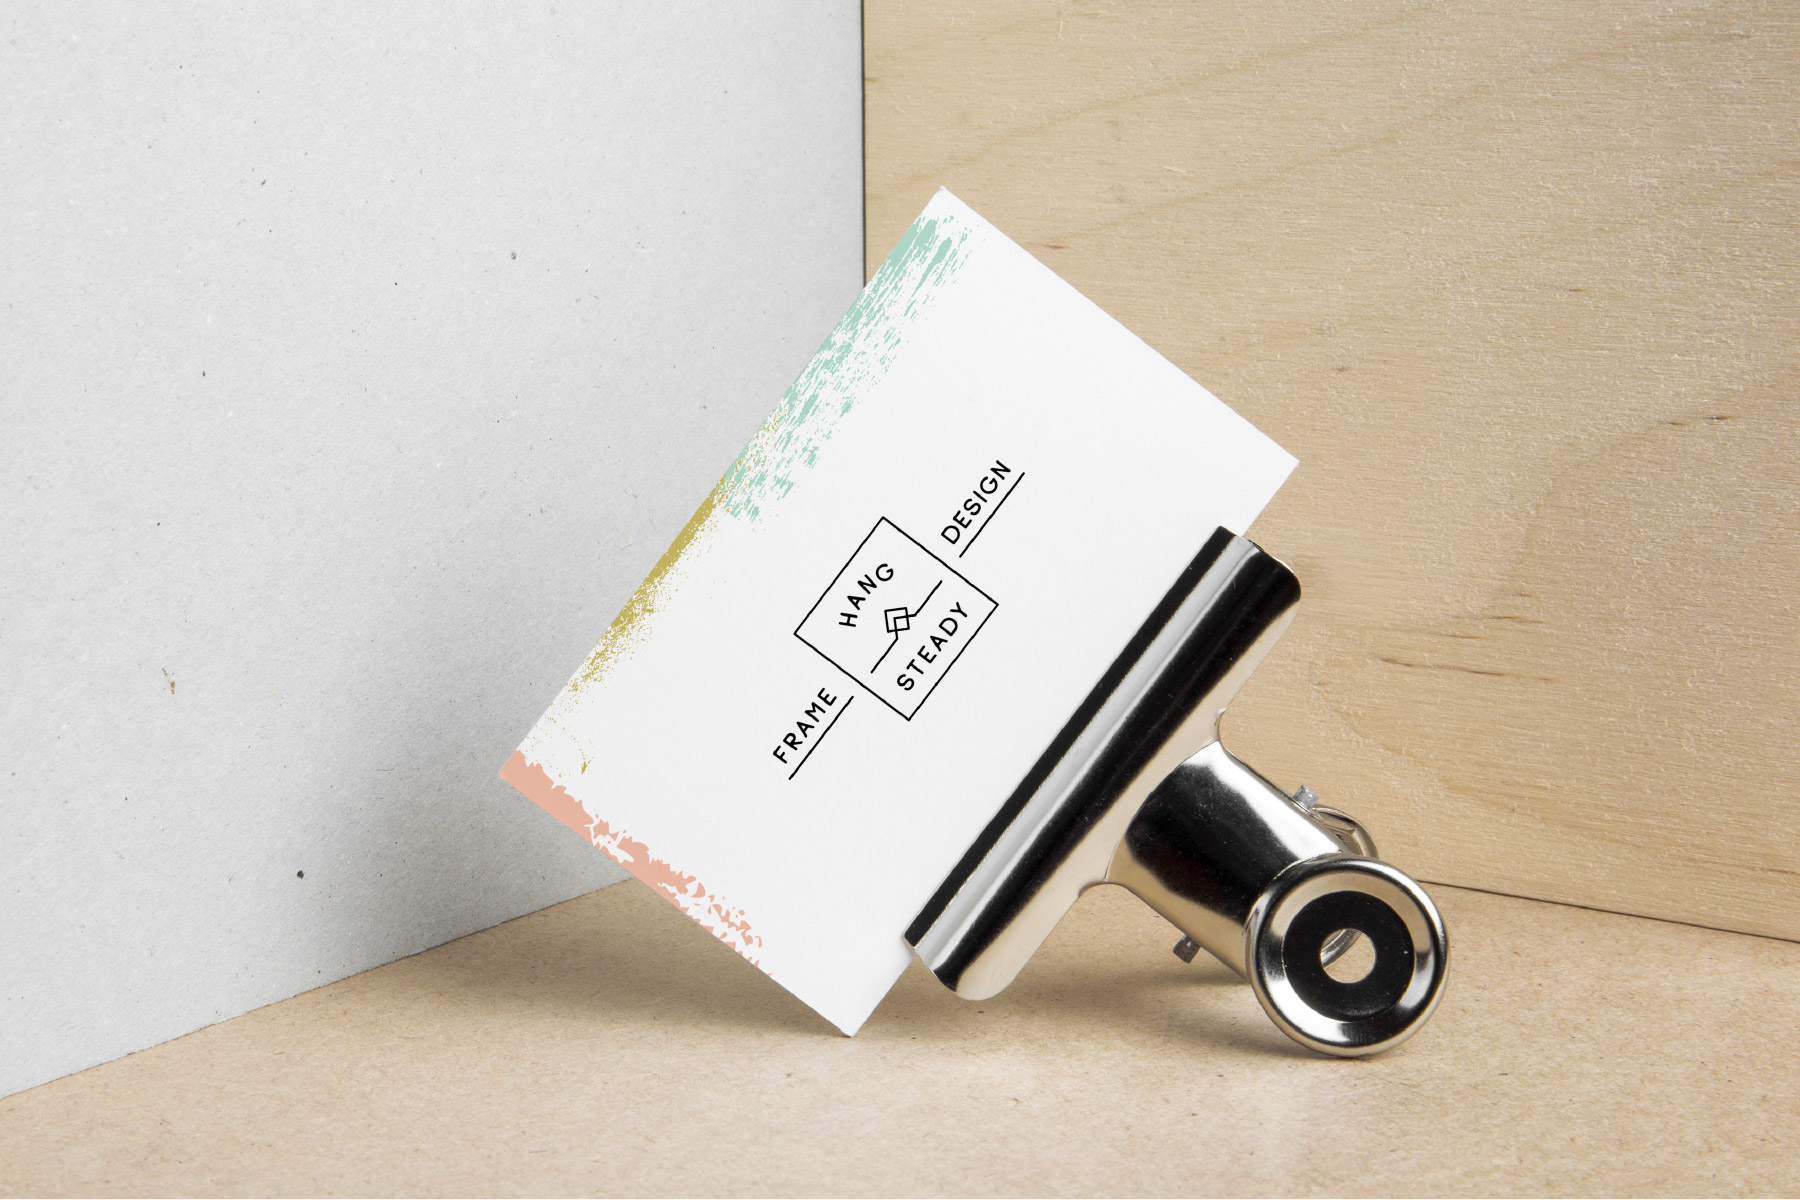 Business card on binder clip with paint splatter details